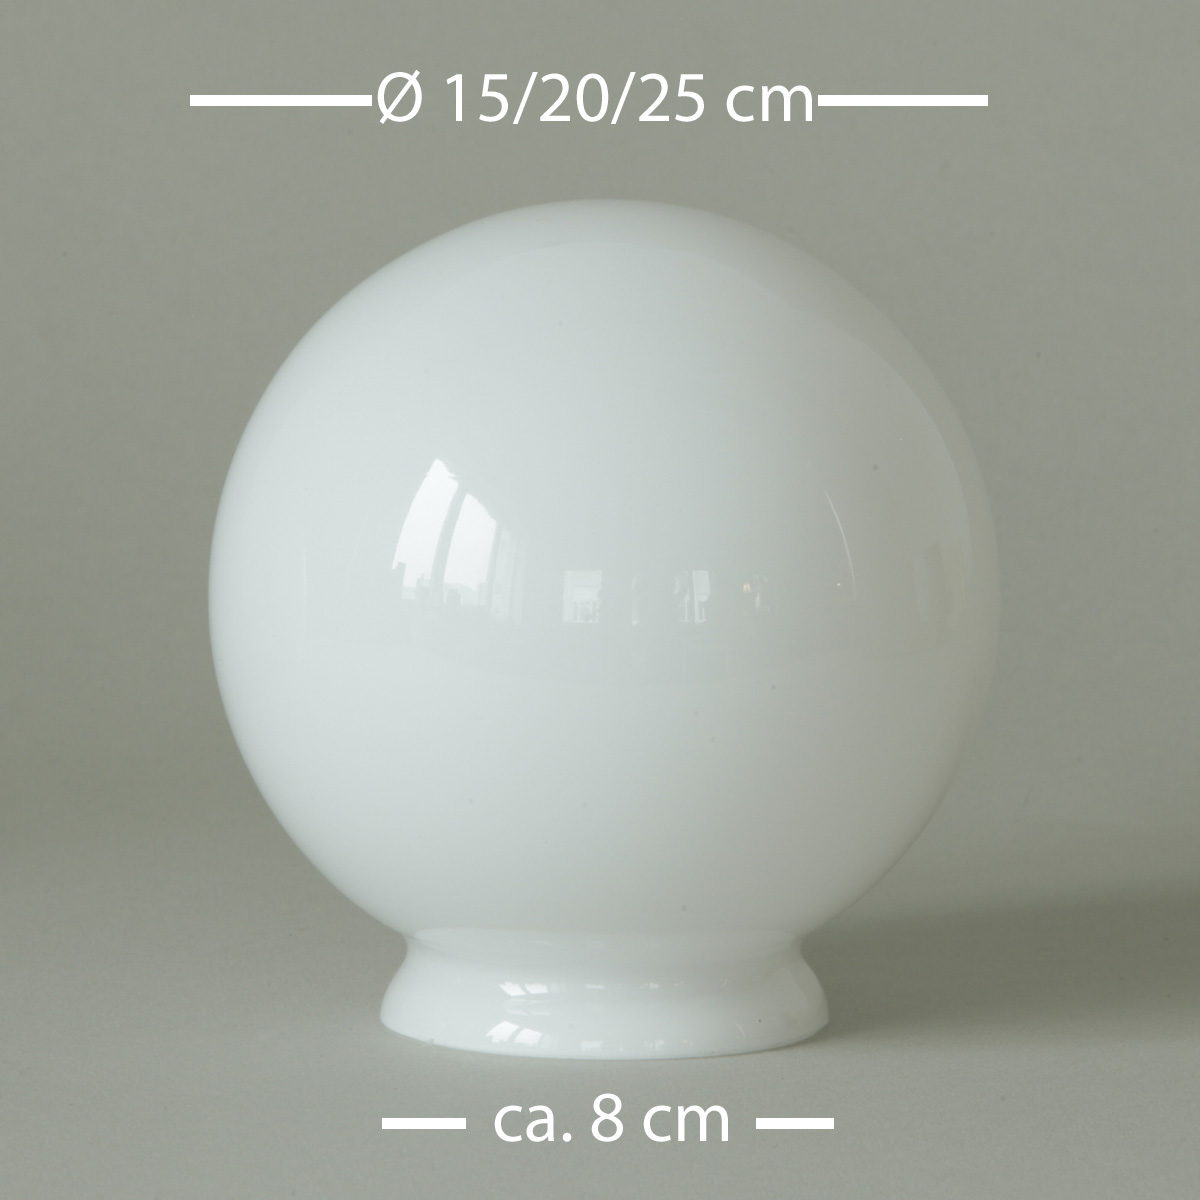 Glass ball Ø 15/20/25 cm in opal white with Ø 8 cm lip